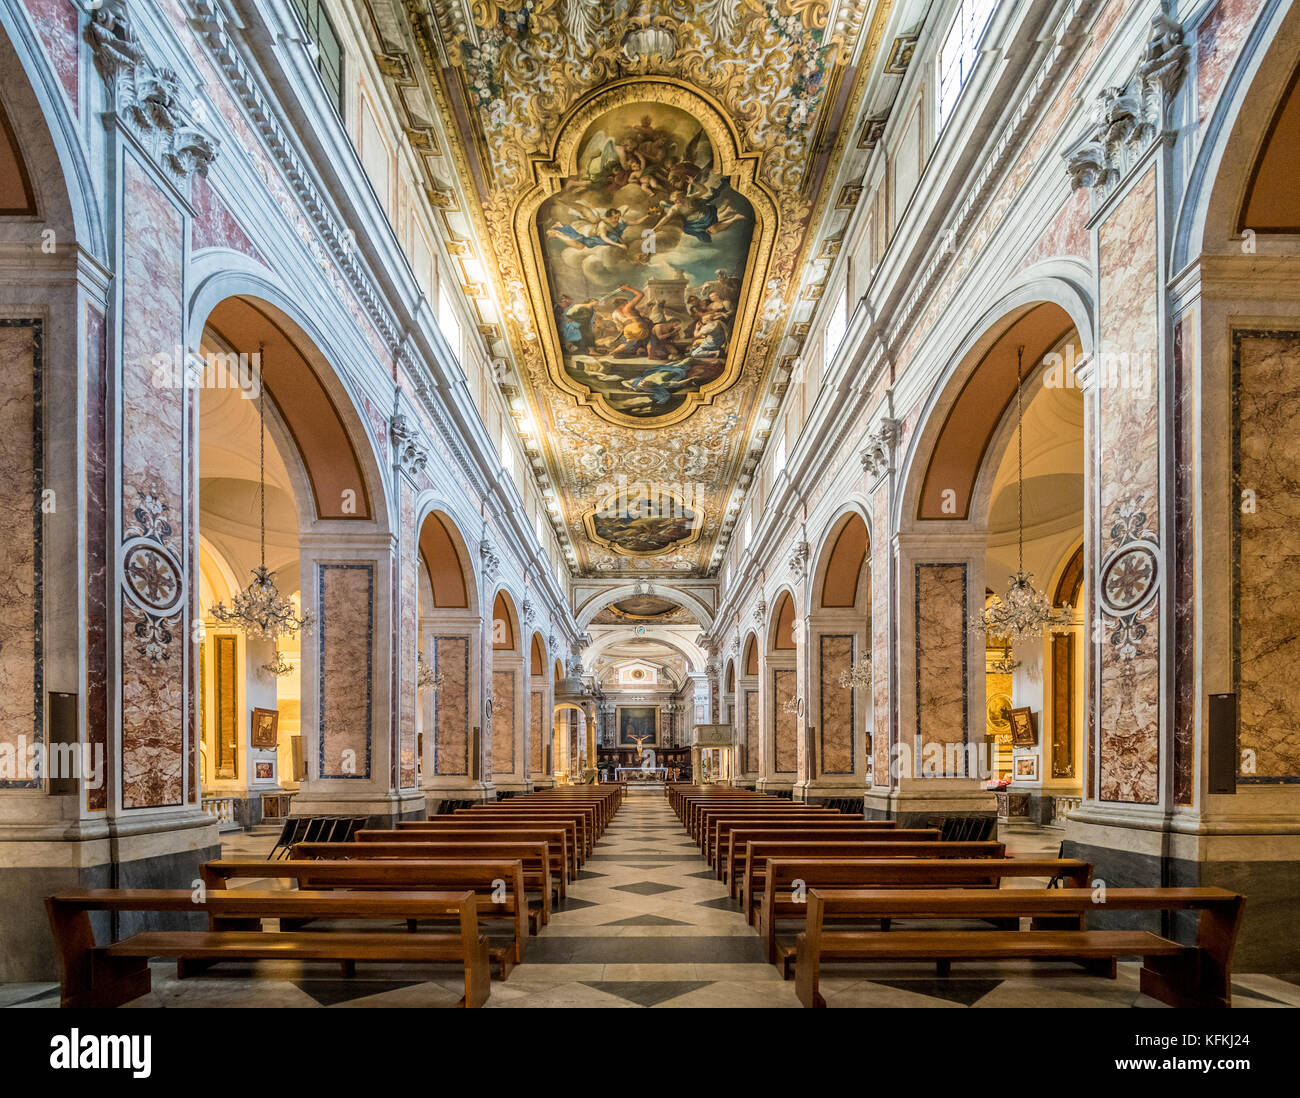 Interior of Sorrento Cathedral, Sorrento, Italy. Stock Photo